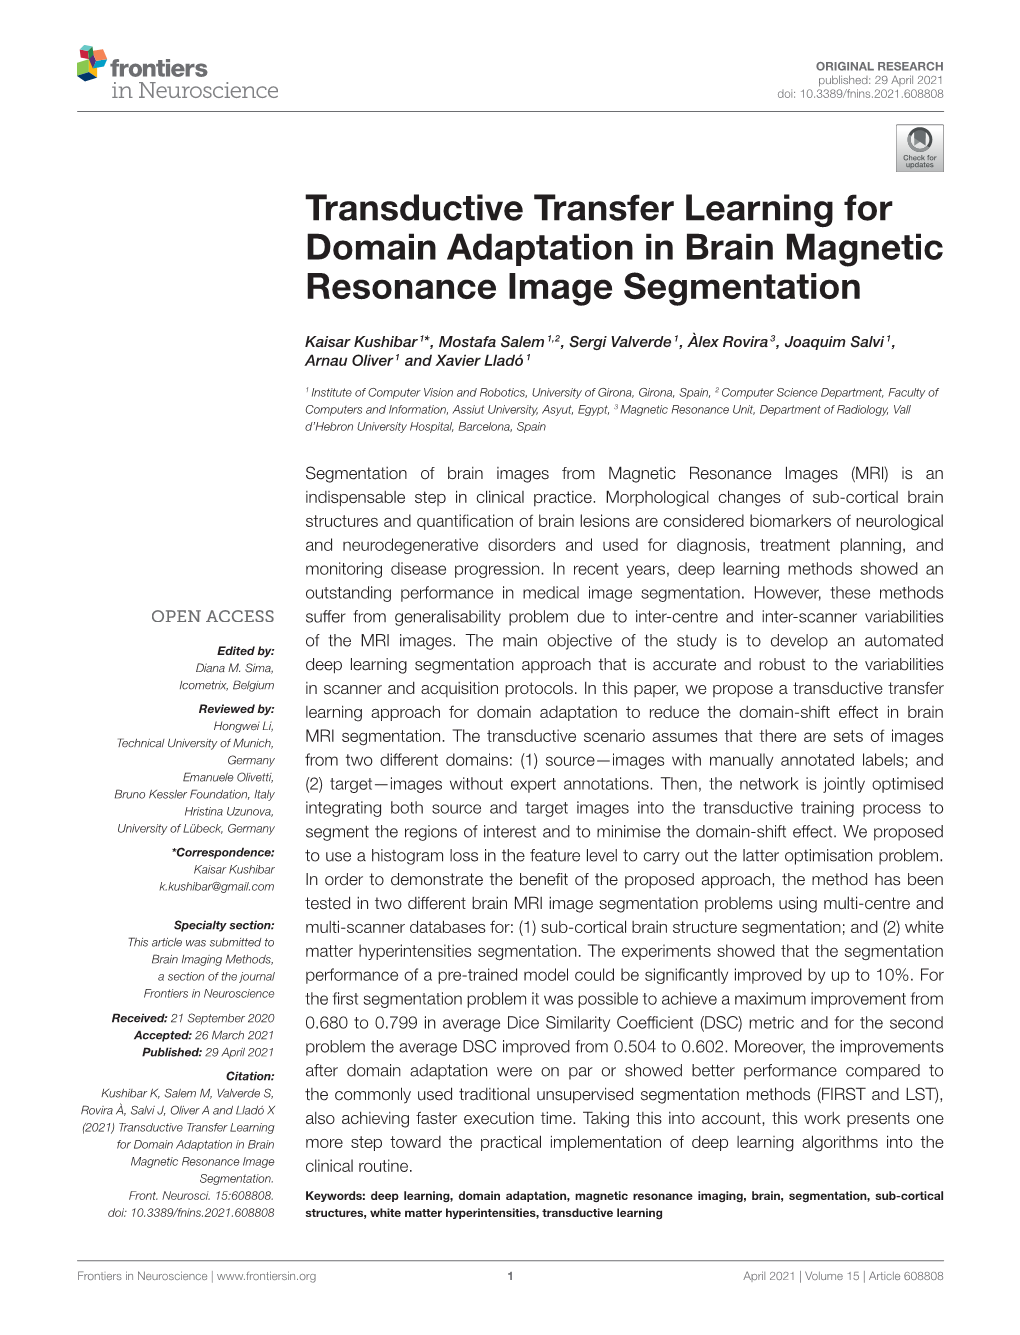 Transductive Transfer Learning for Domain Adaptation in Brain Magnetic Resonance Image Segmentation